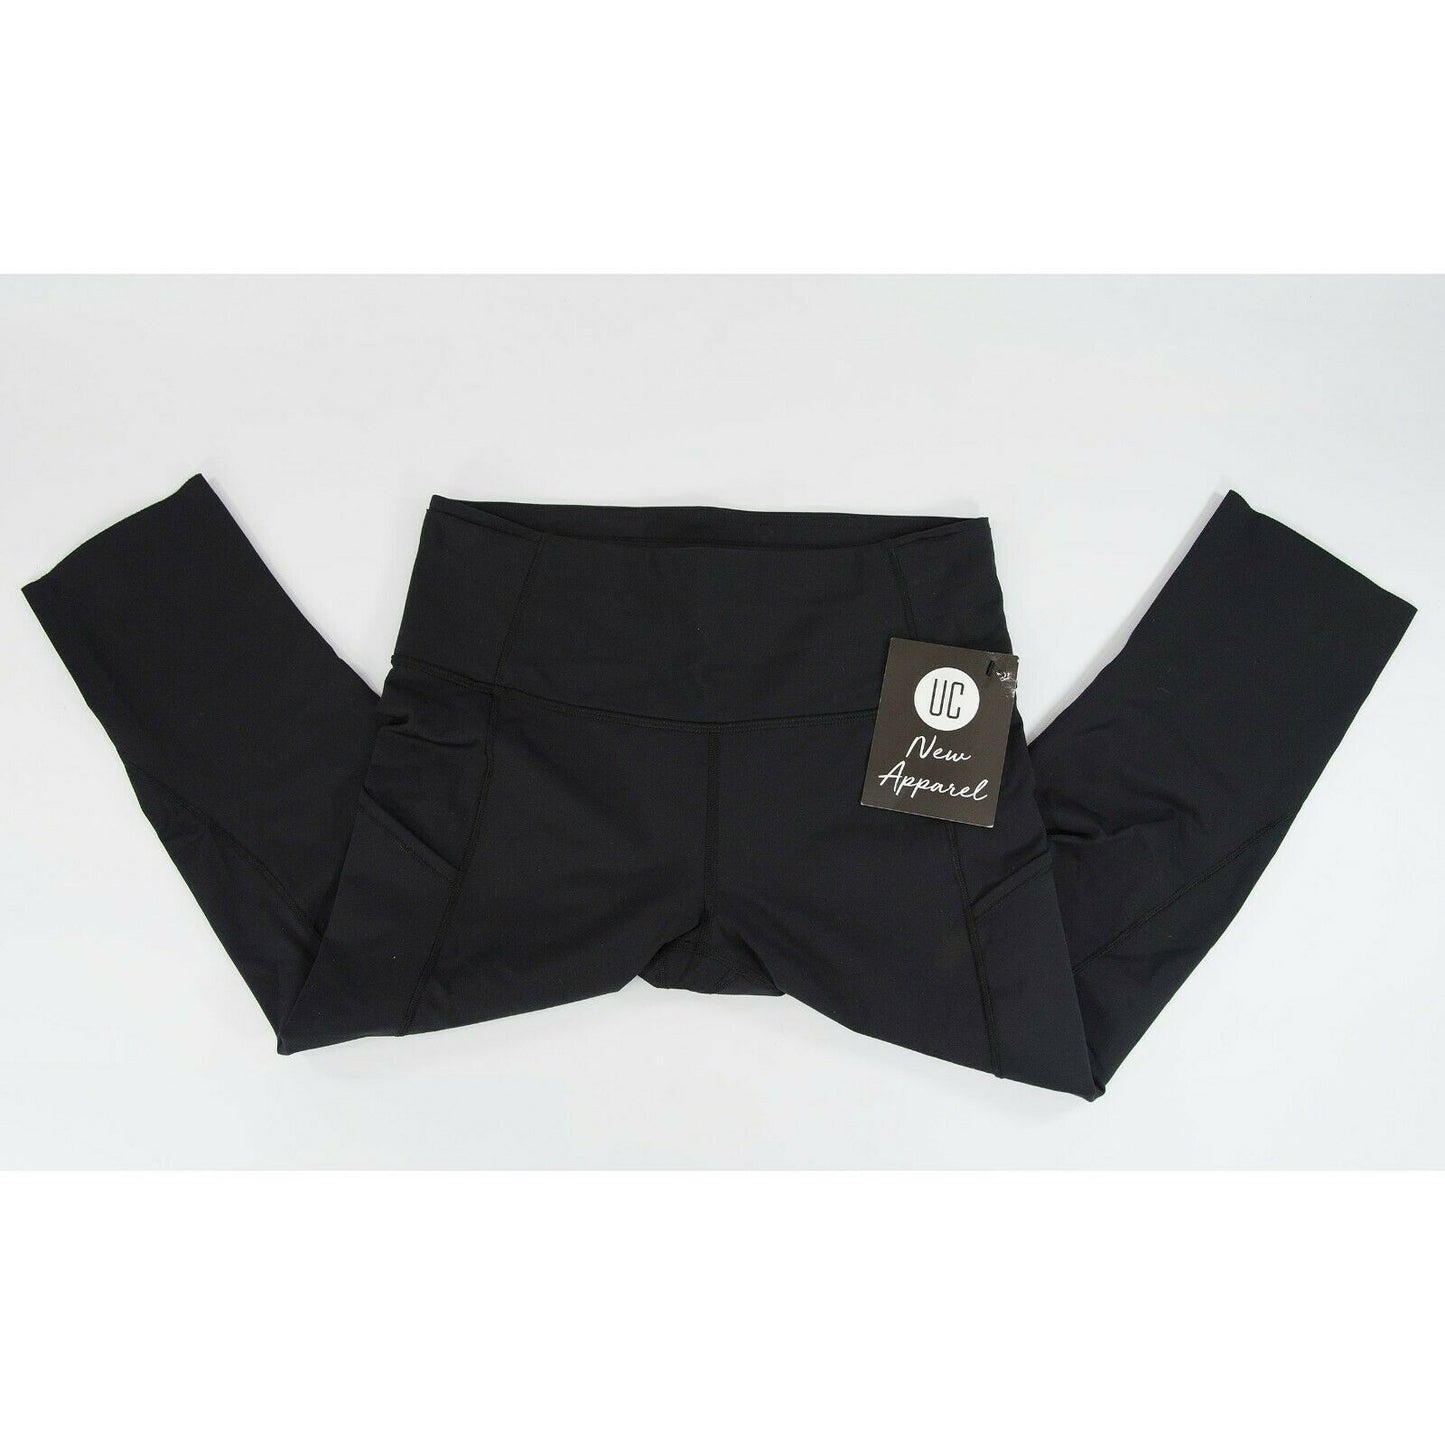 Lululemon Black Wonder Under Cropped Pocket tight leggings NWOT Size 8 C6